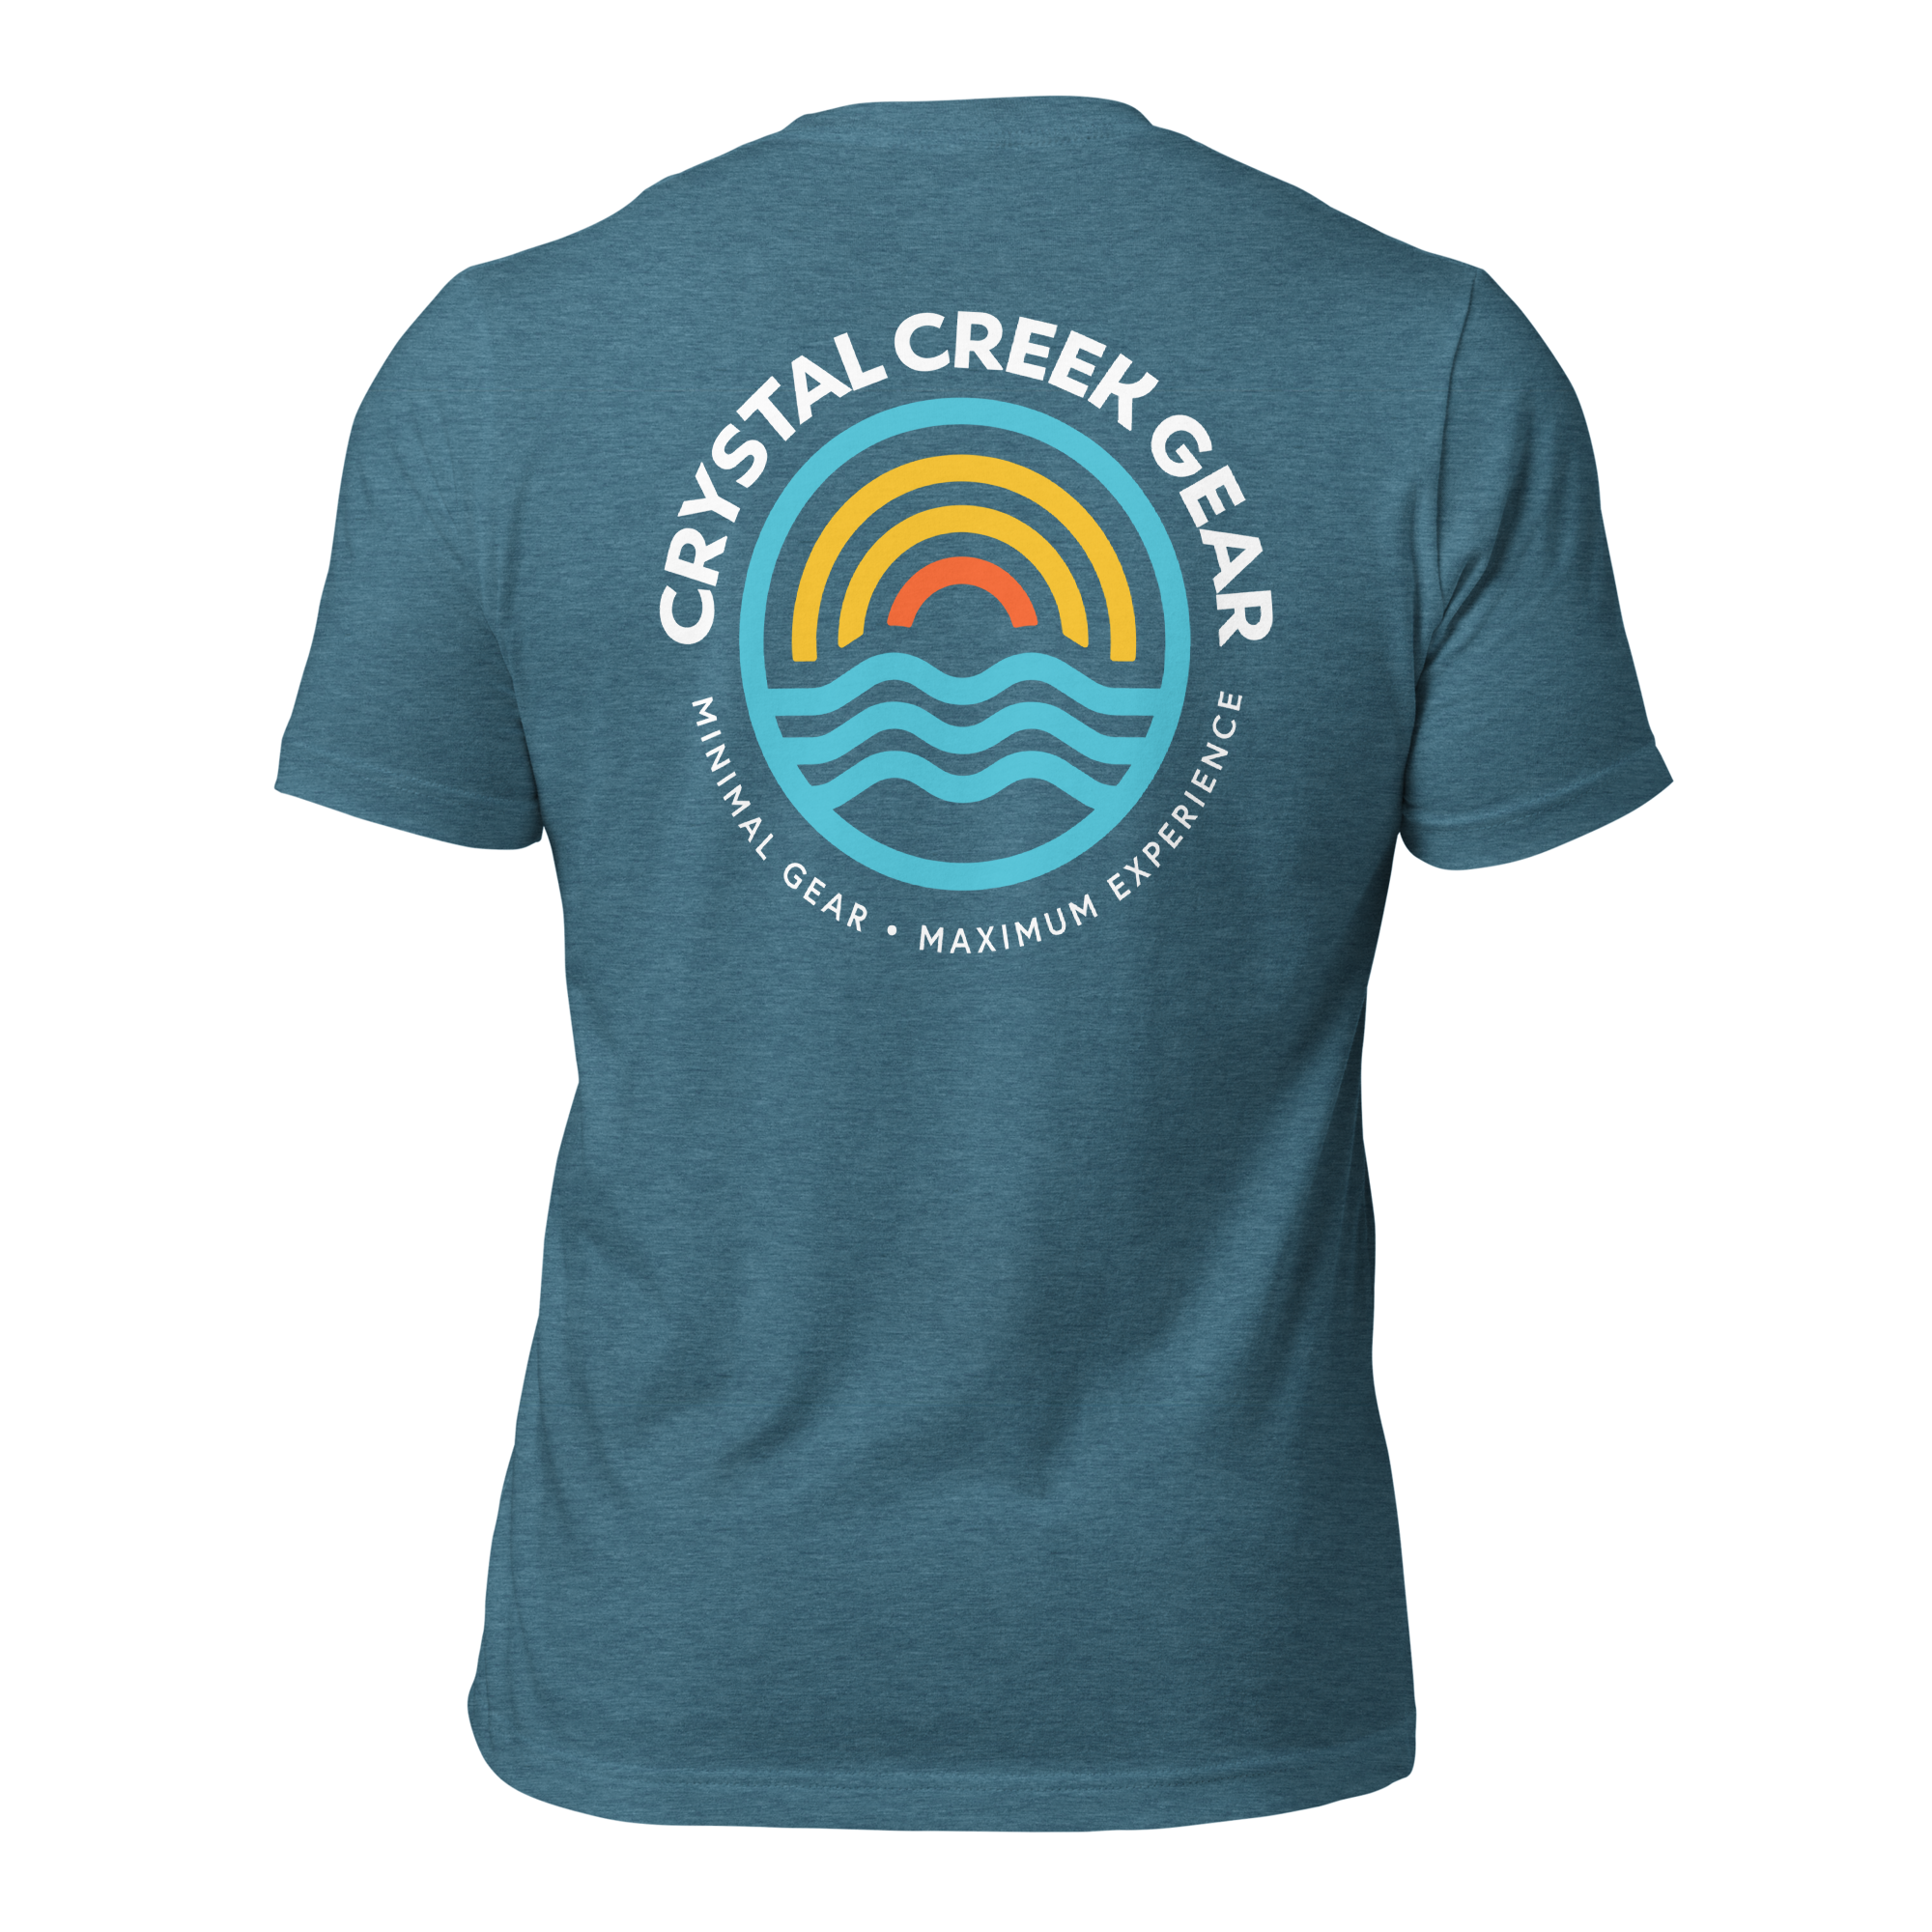 Creek-Side Companion Tee - Crystal Creek Gear